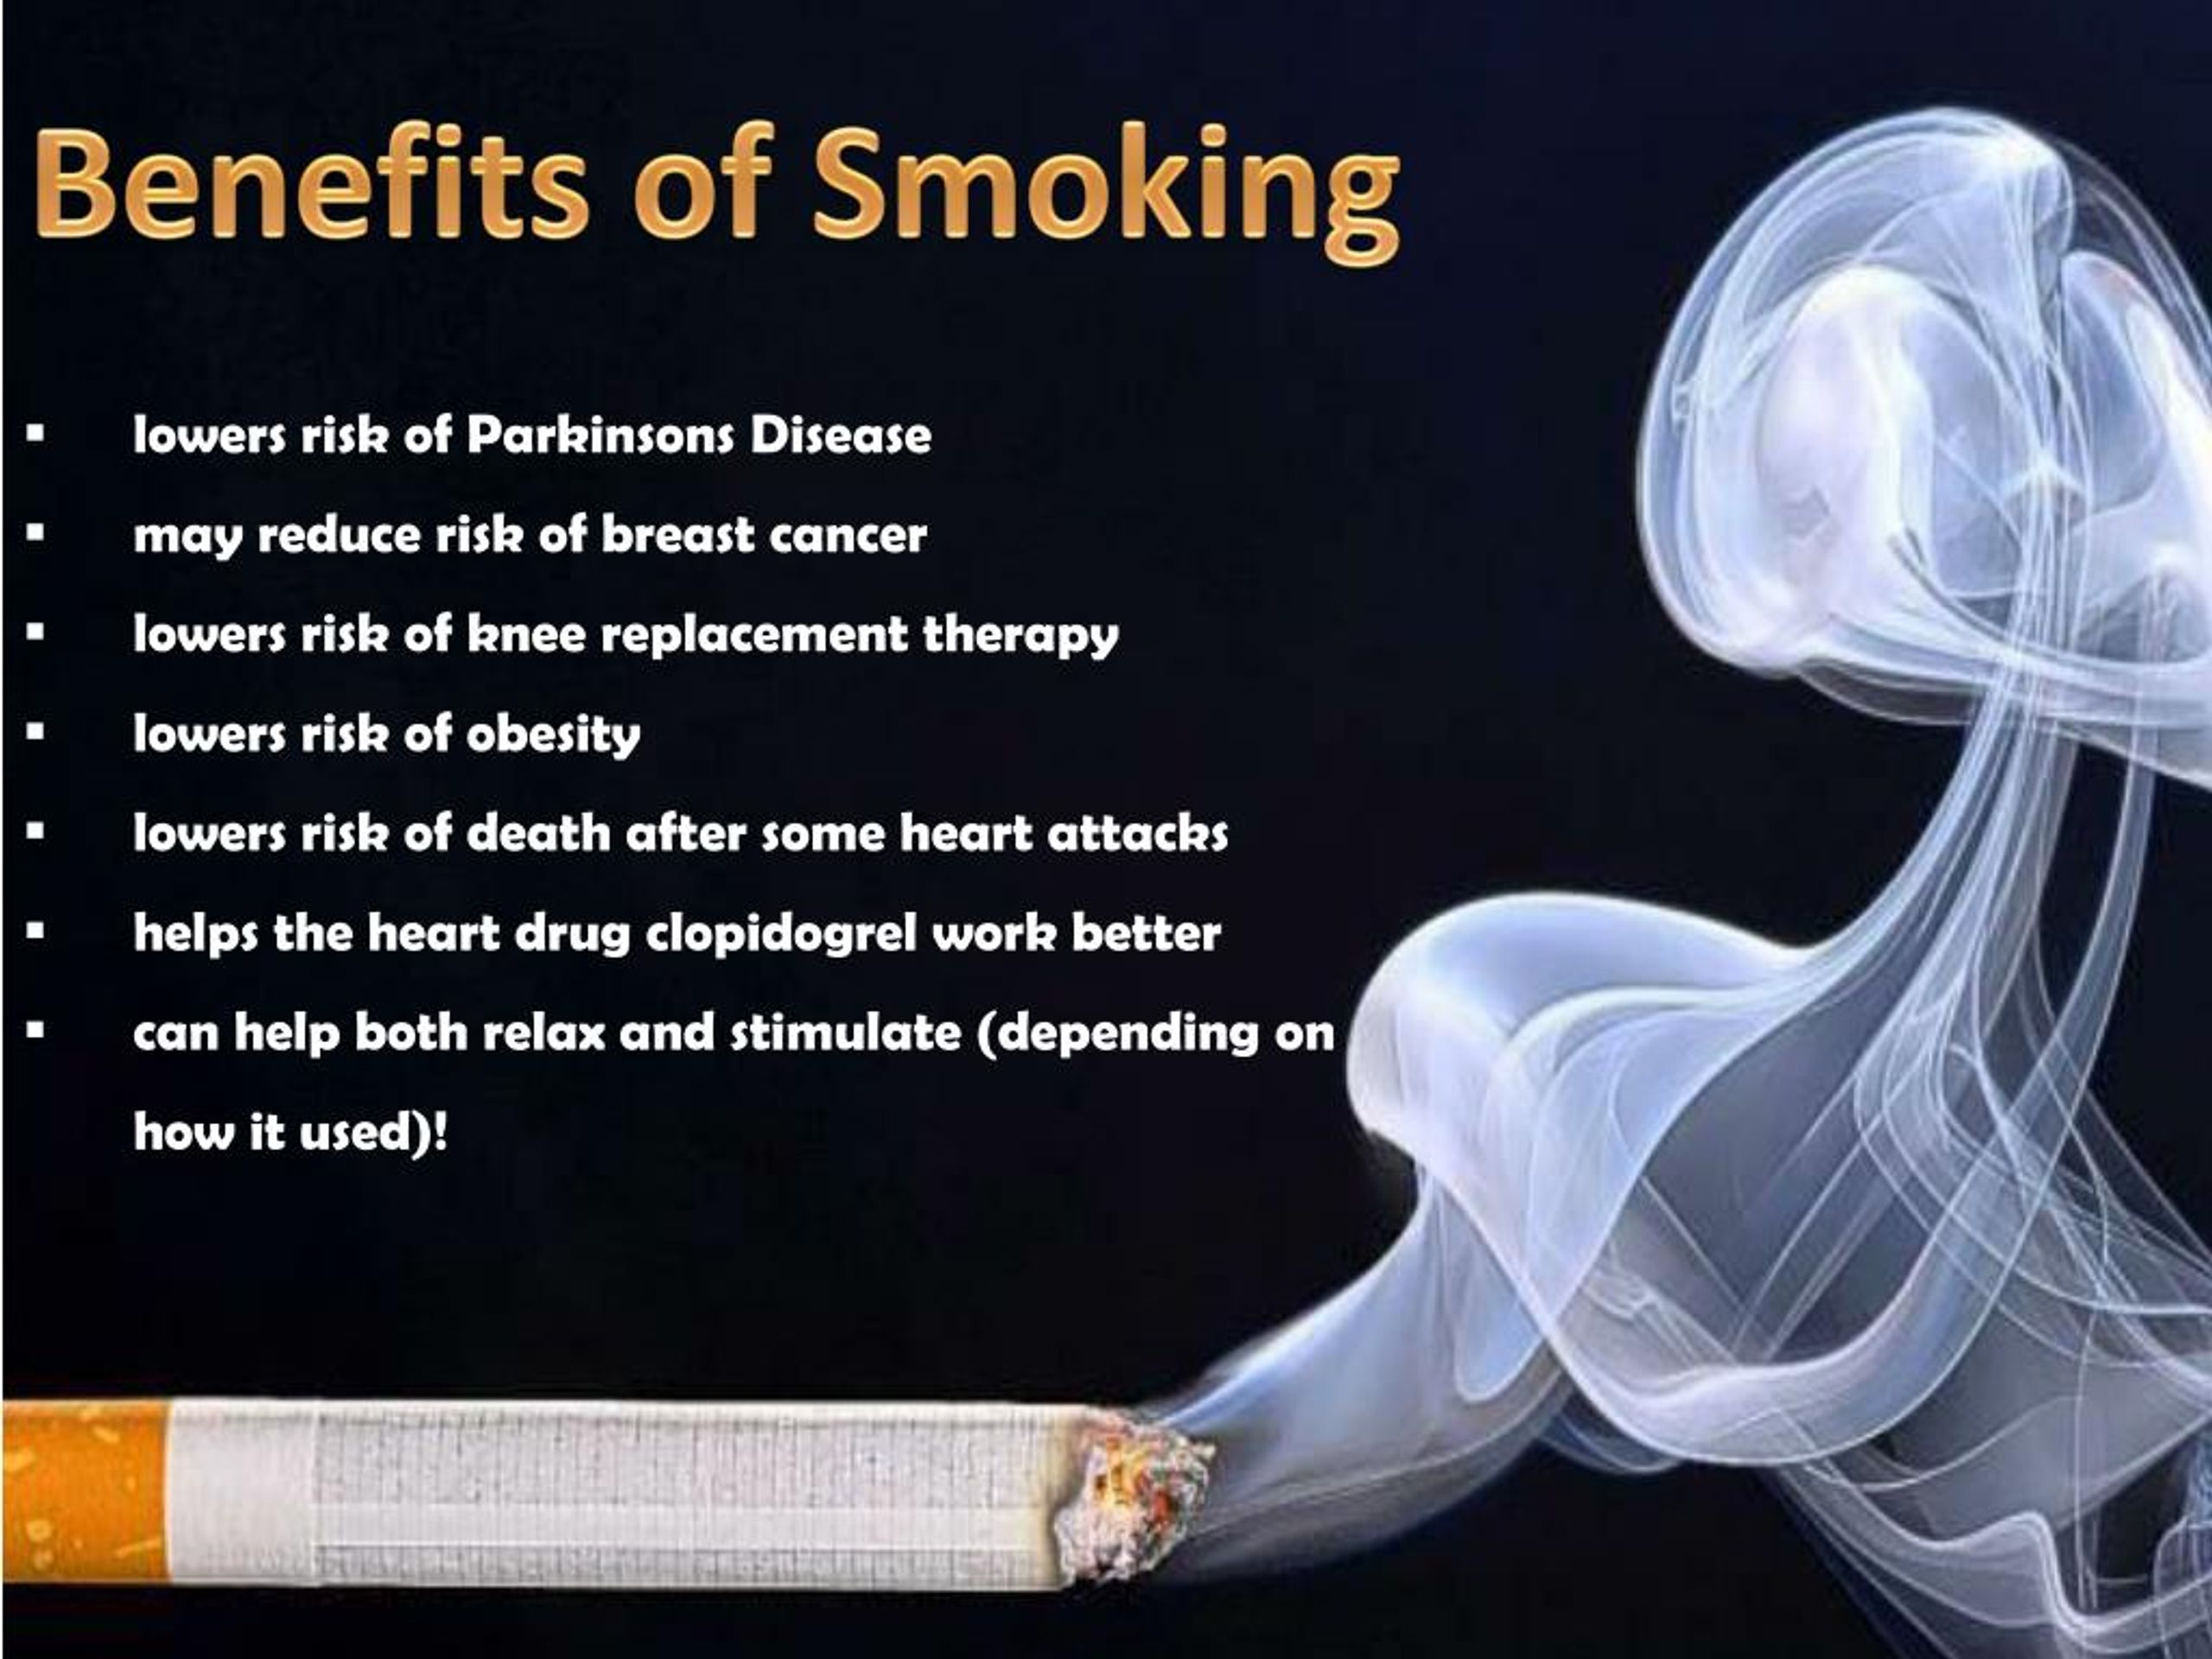 presentation topic on smoking